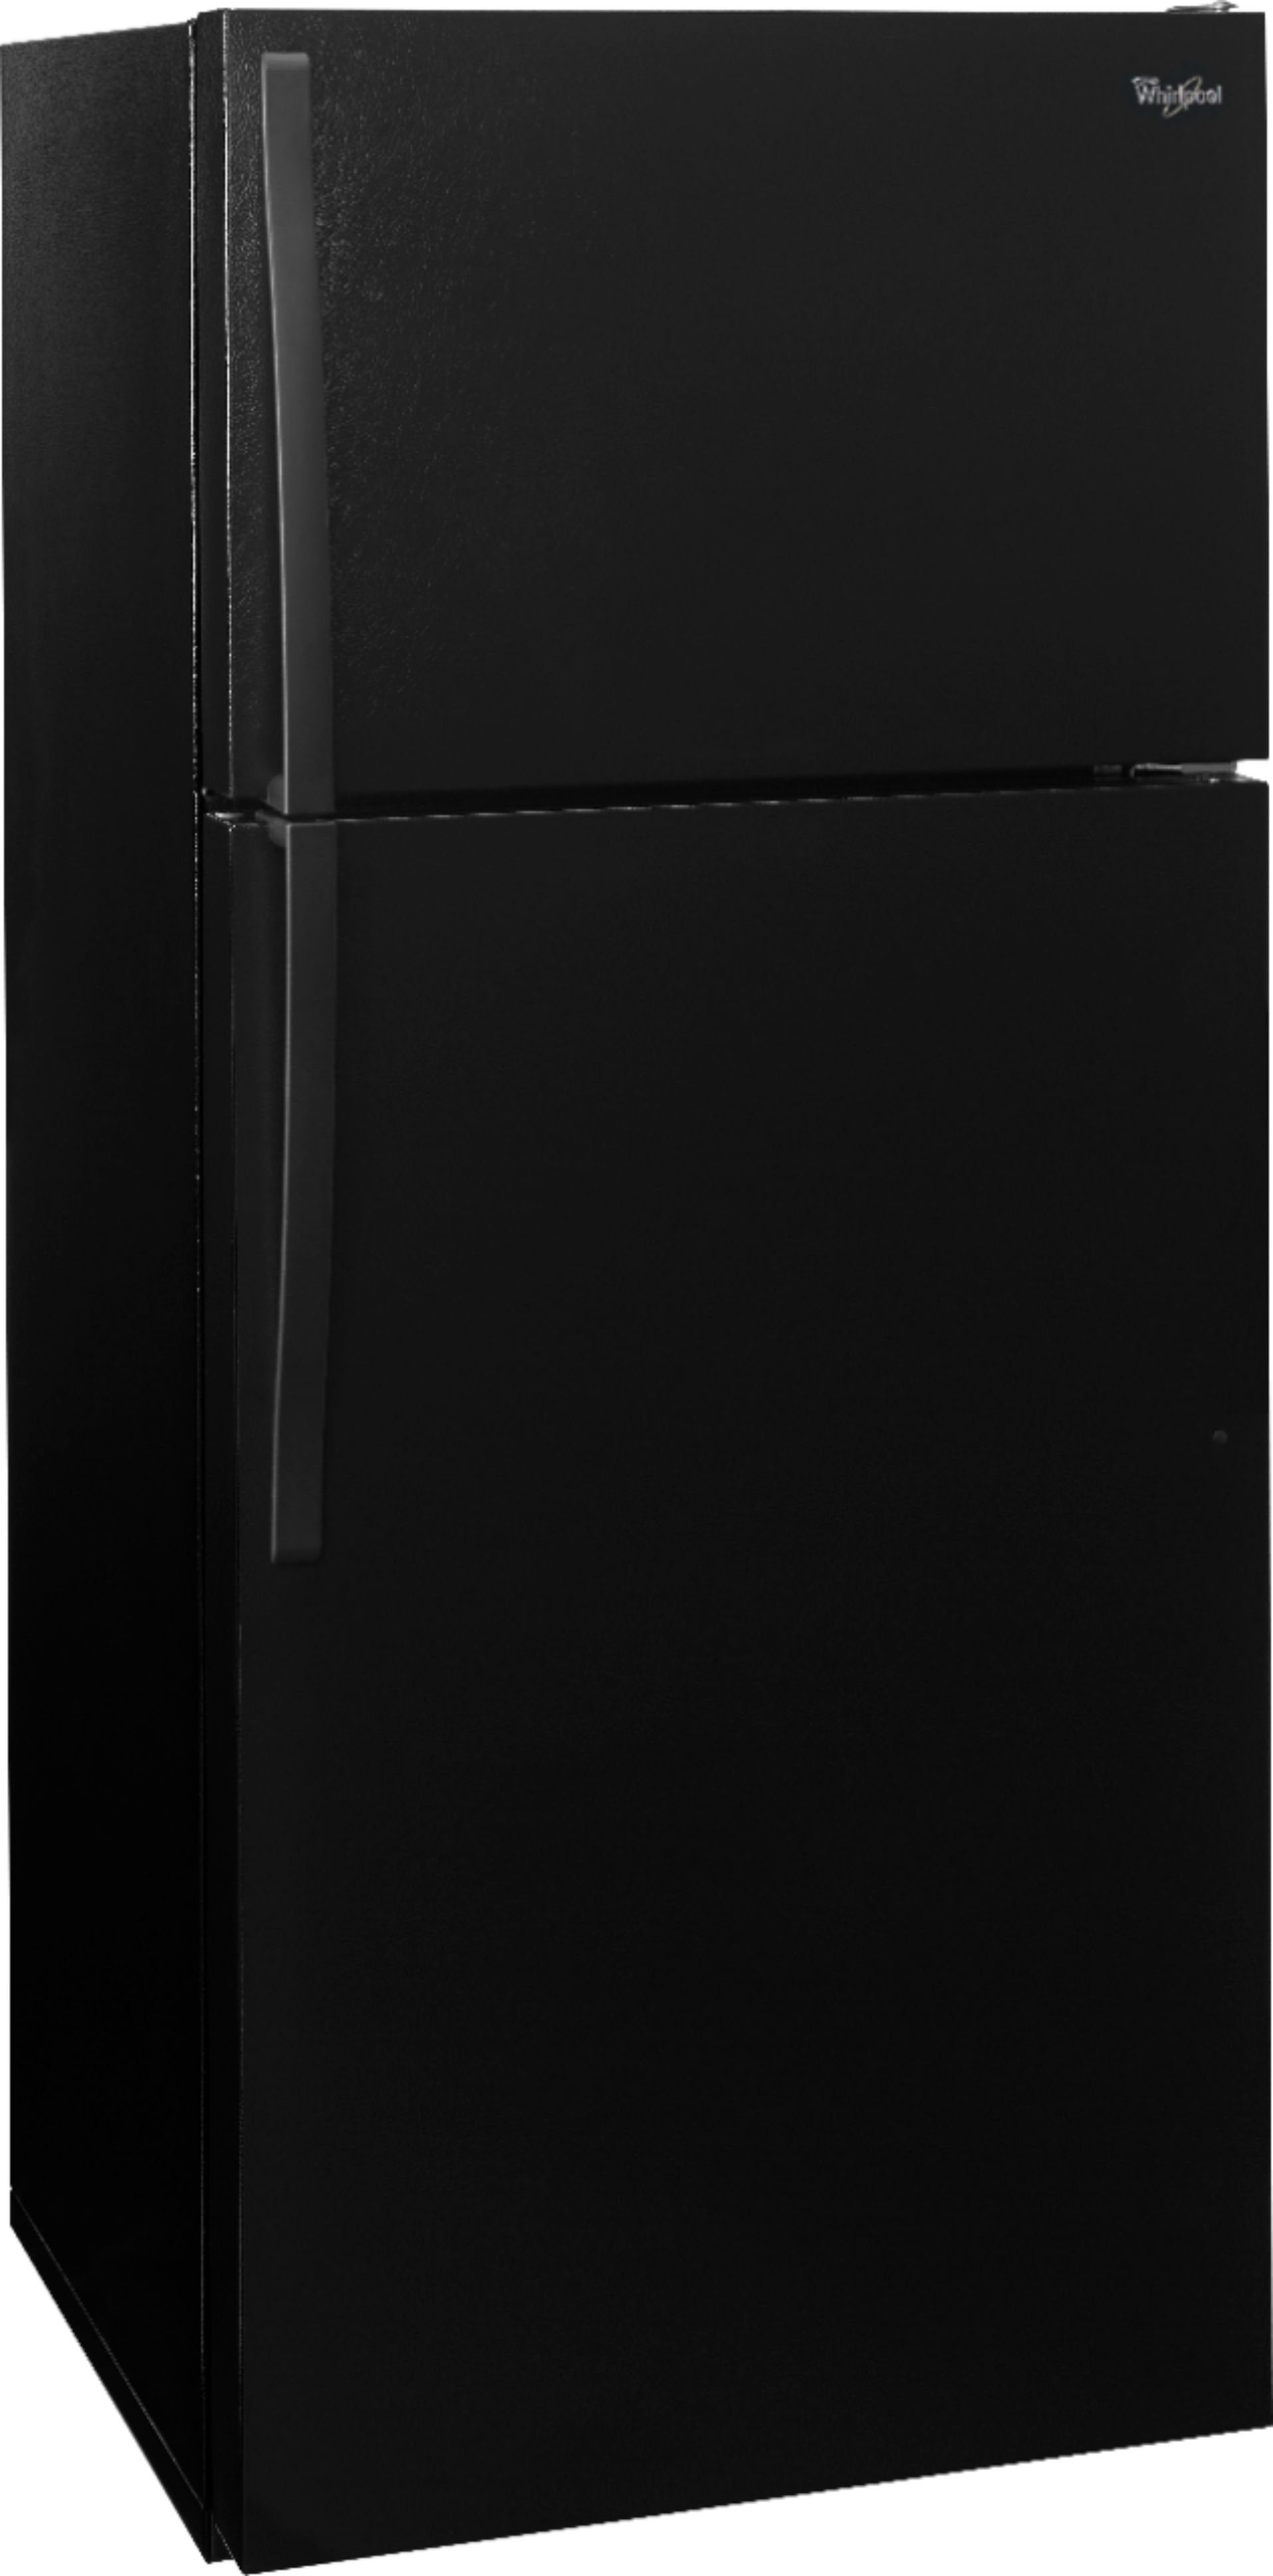 Angle View: Whirlpool - 14.3 Cu. Ft. Top-Freezer Refrigerator - Black